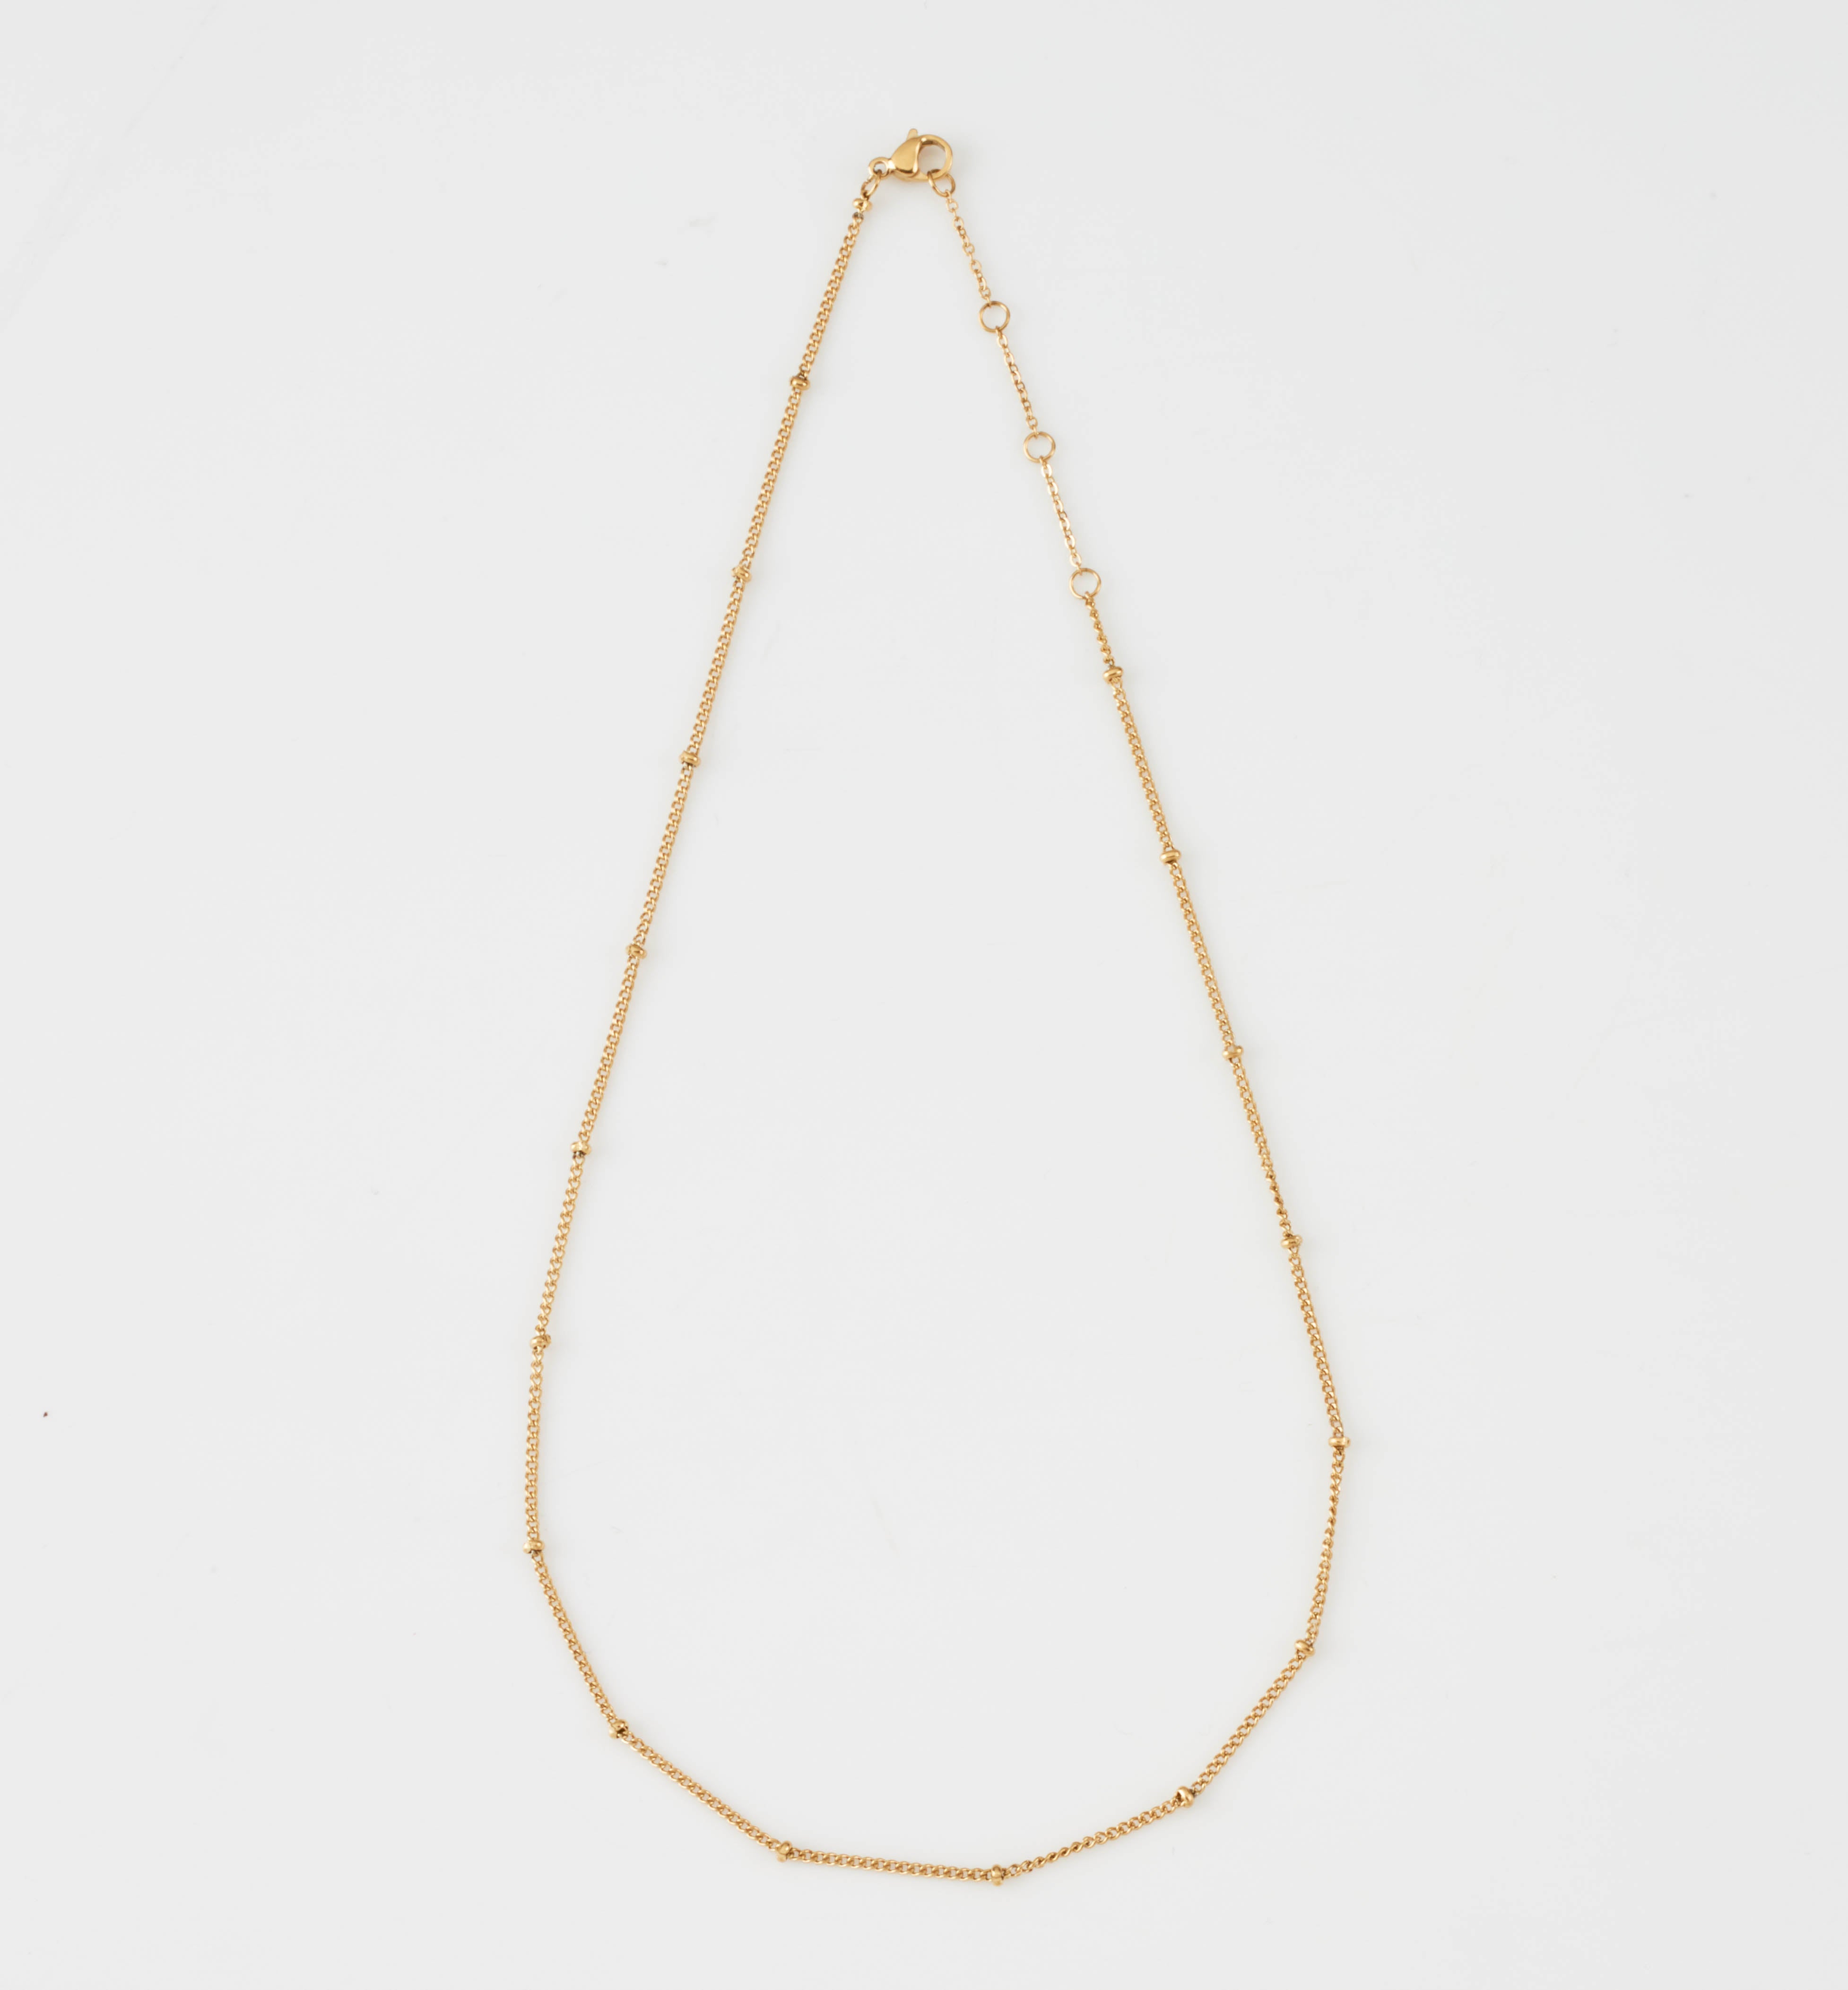 Josie - Silver Beaded Chain Necklace - Ocean Wave Jewelry